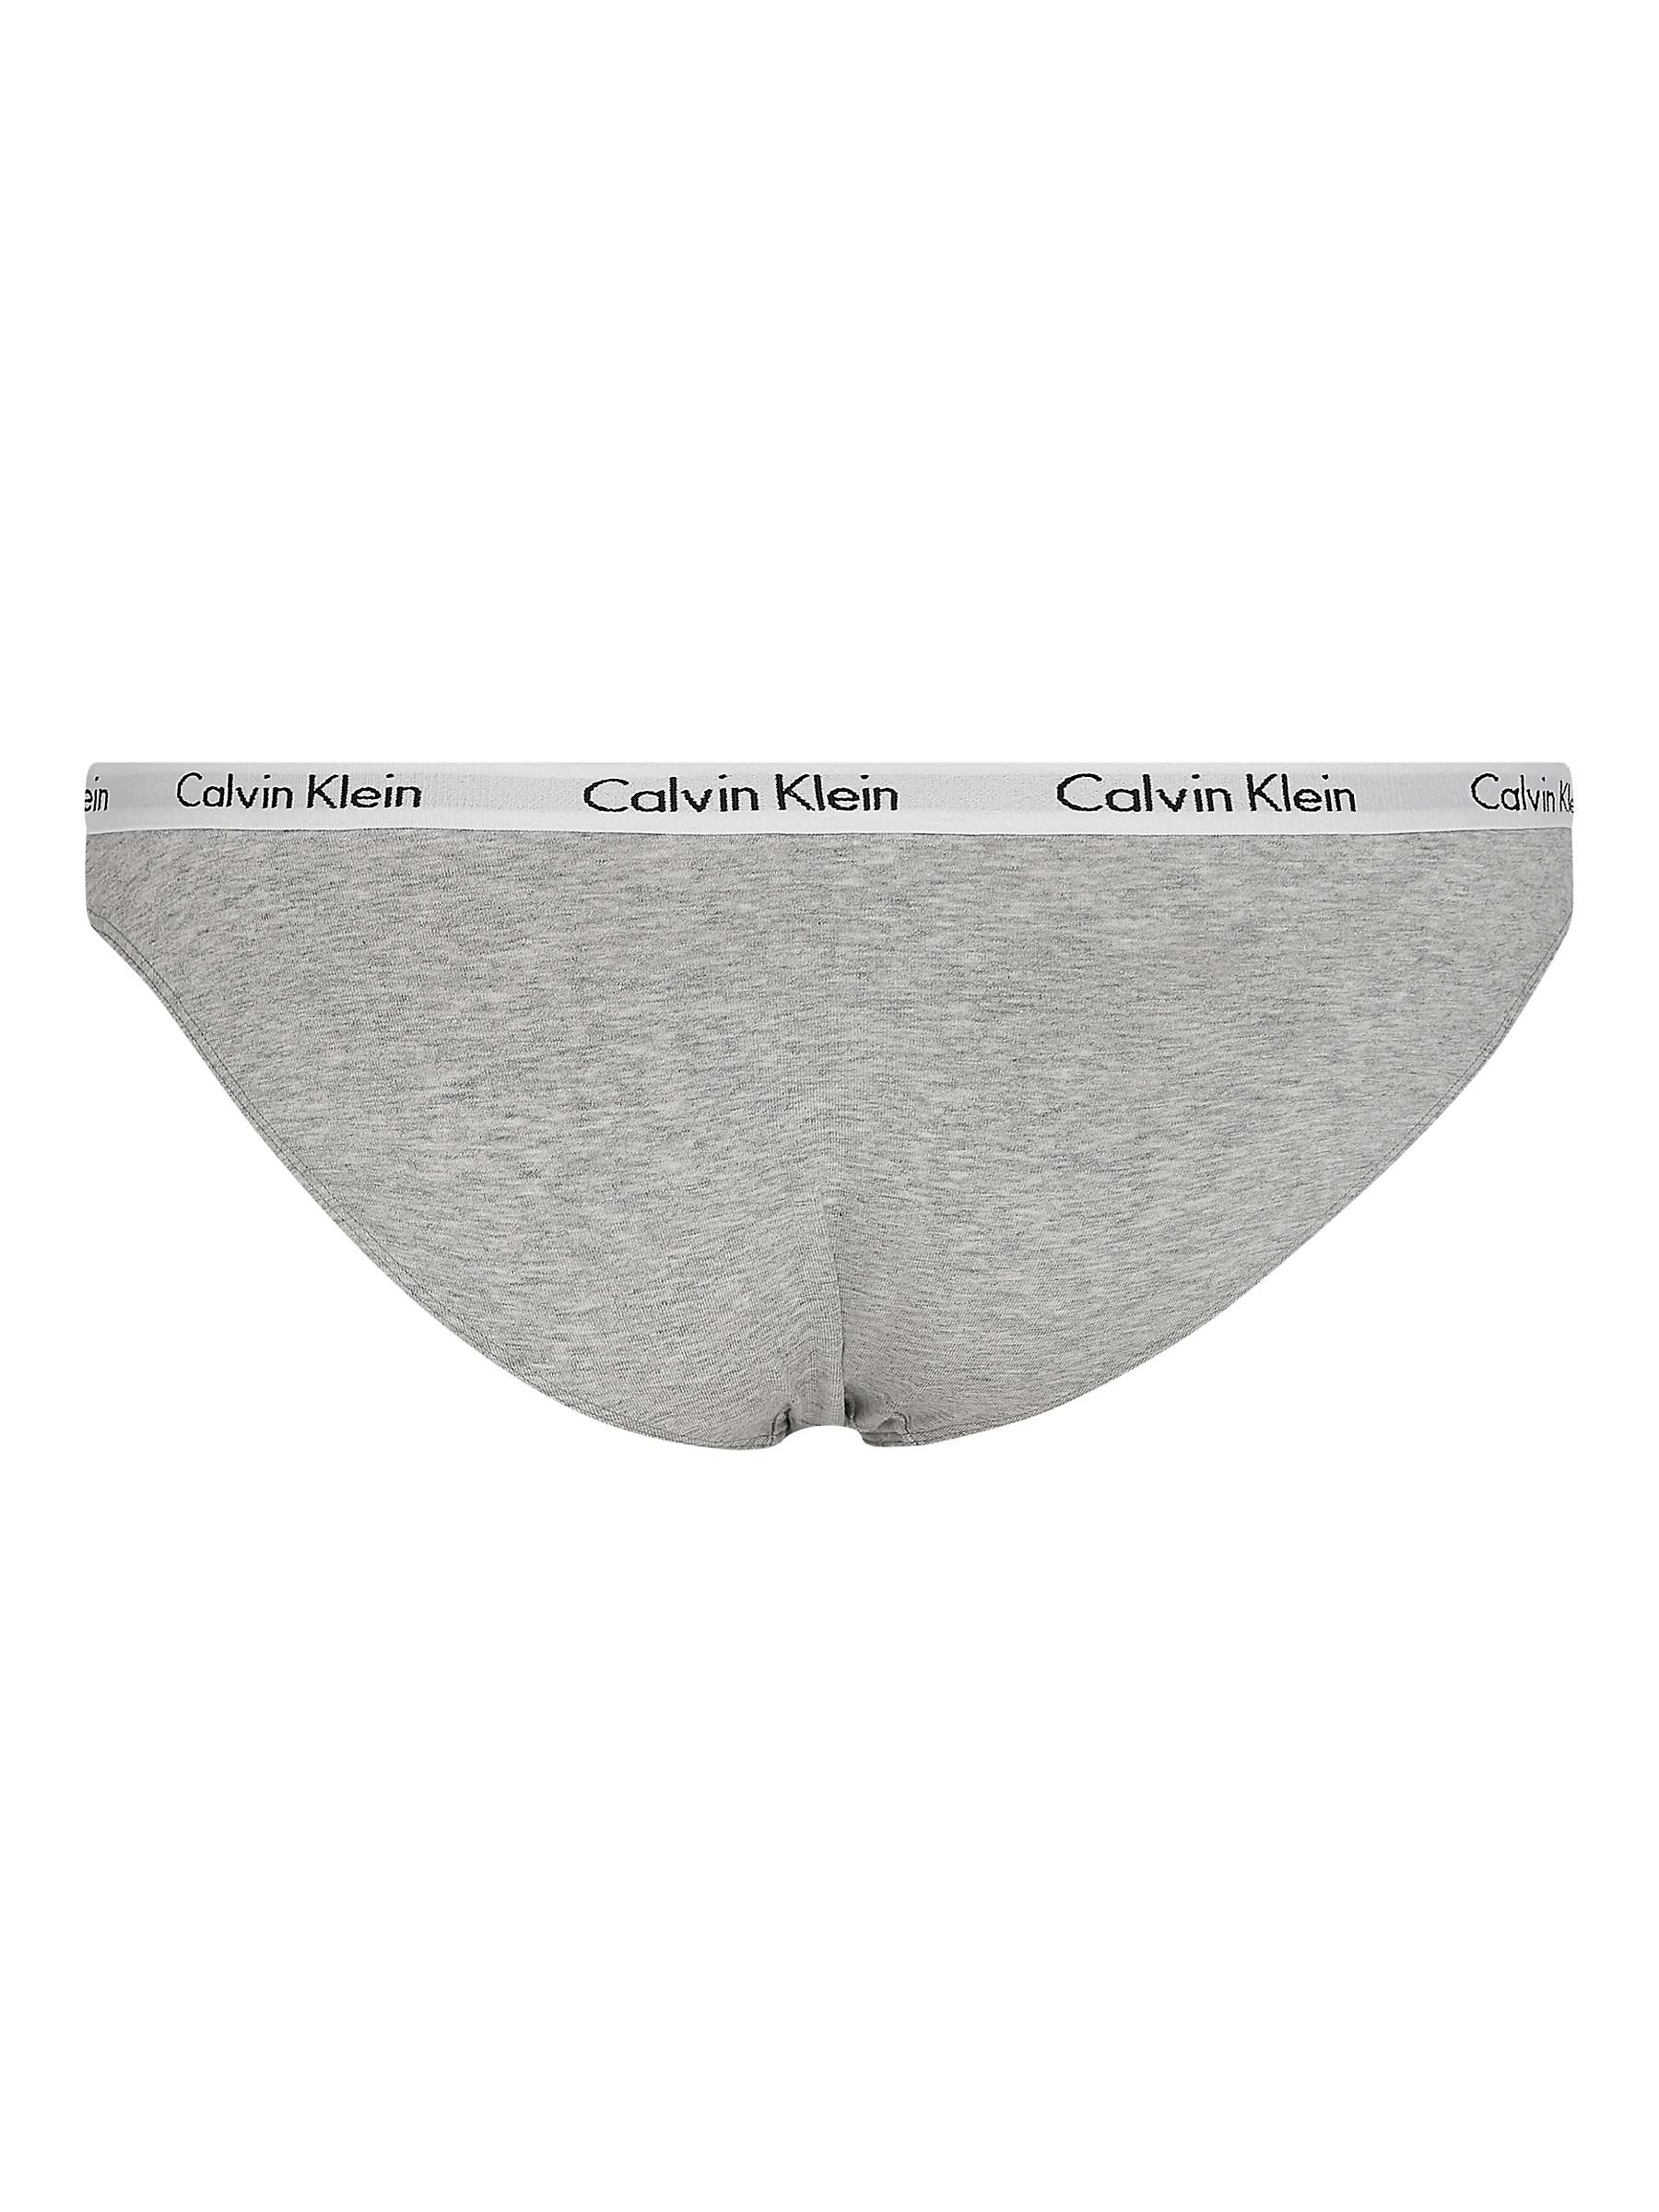 Buy Calvin Klein Carousel Bikini Knickers Online at johnlewis.com